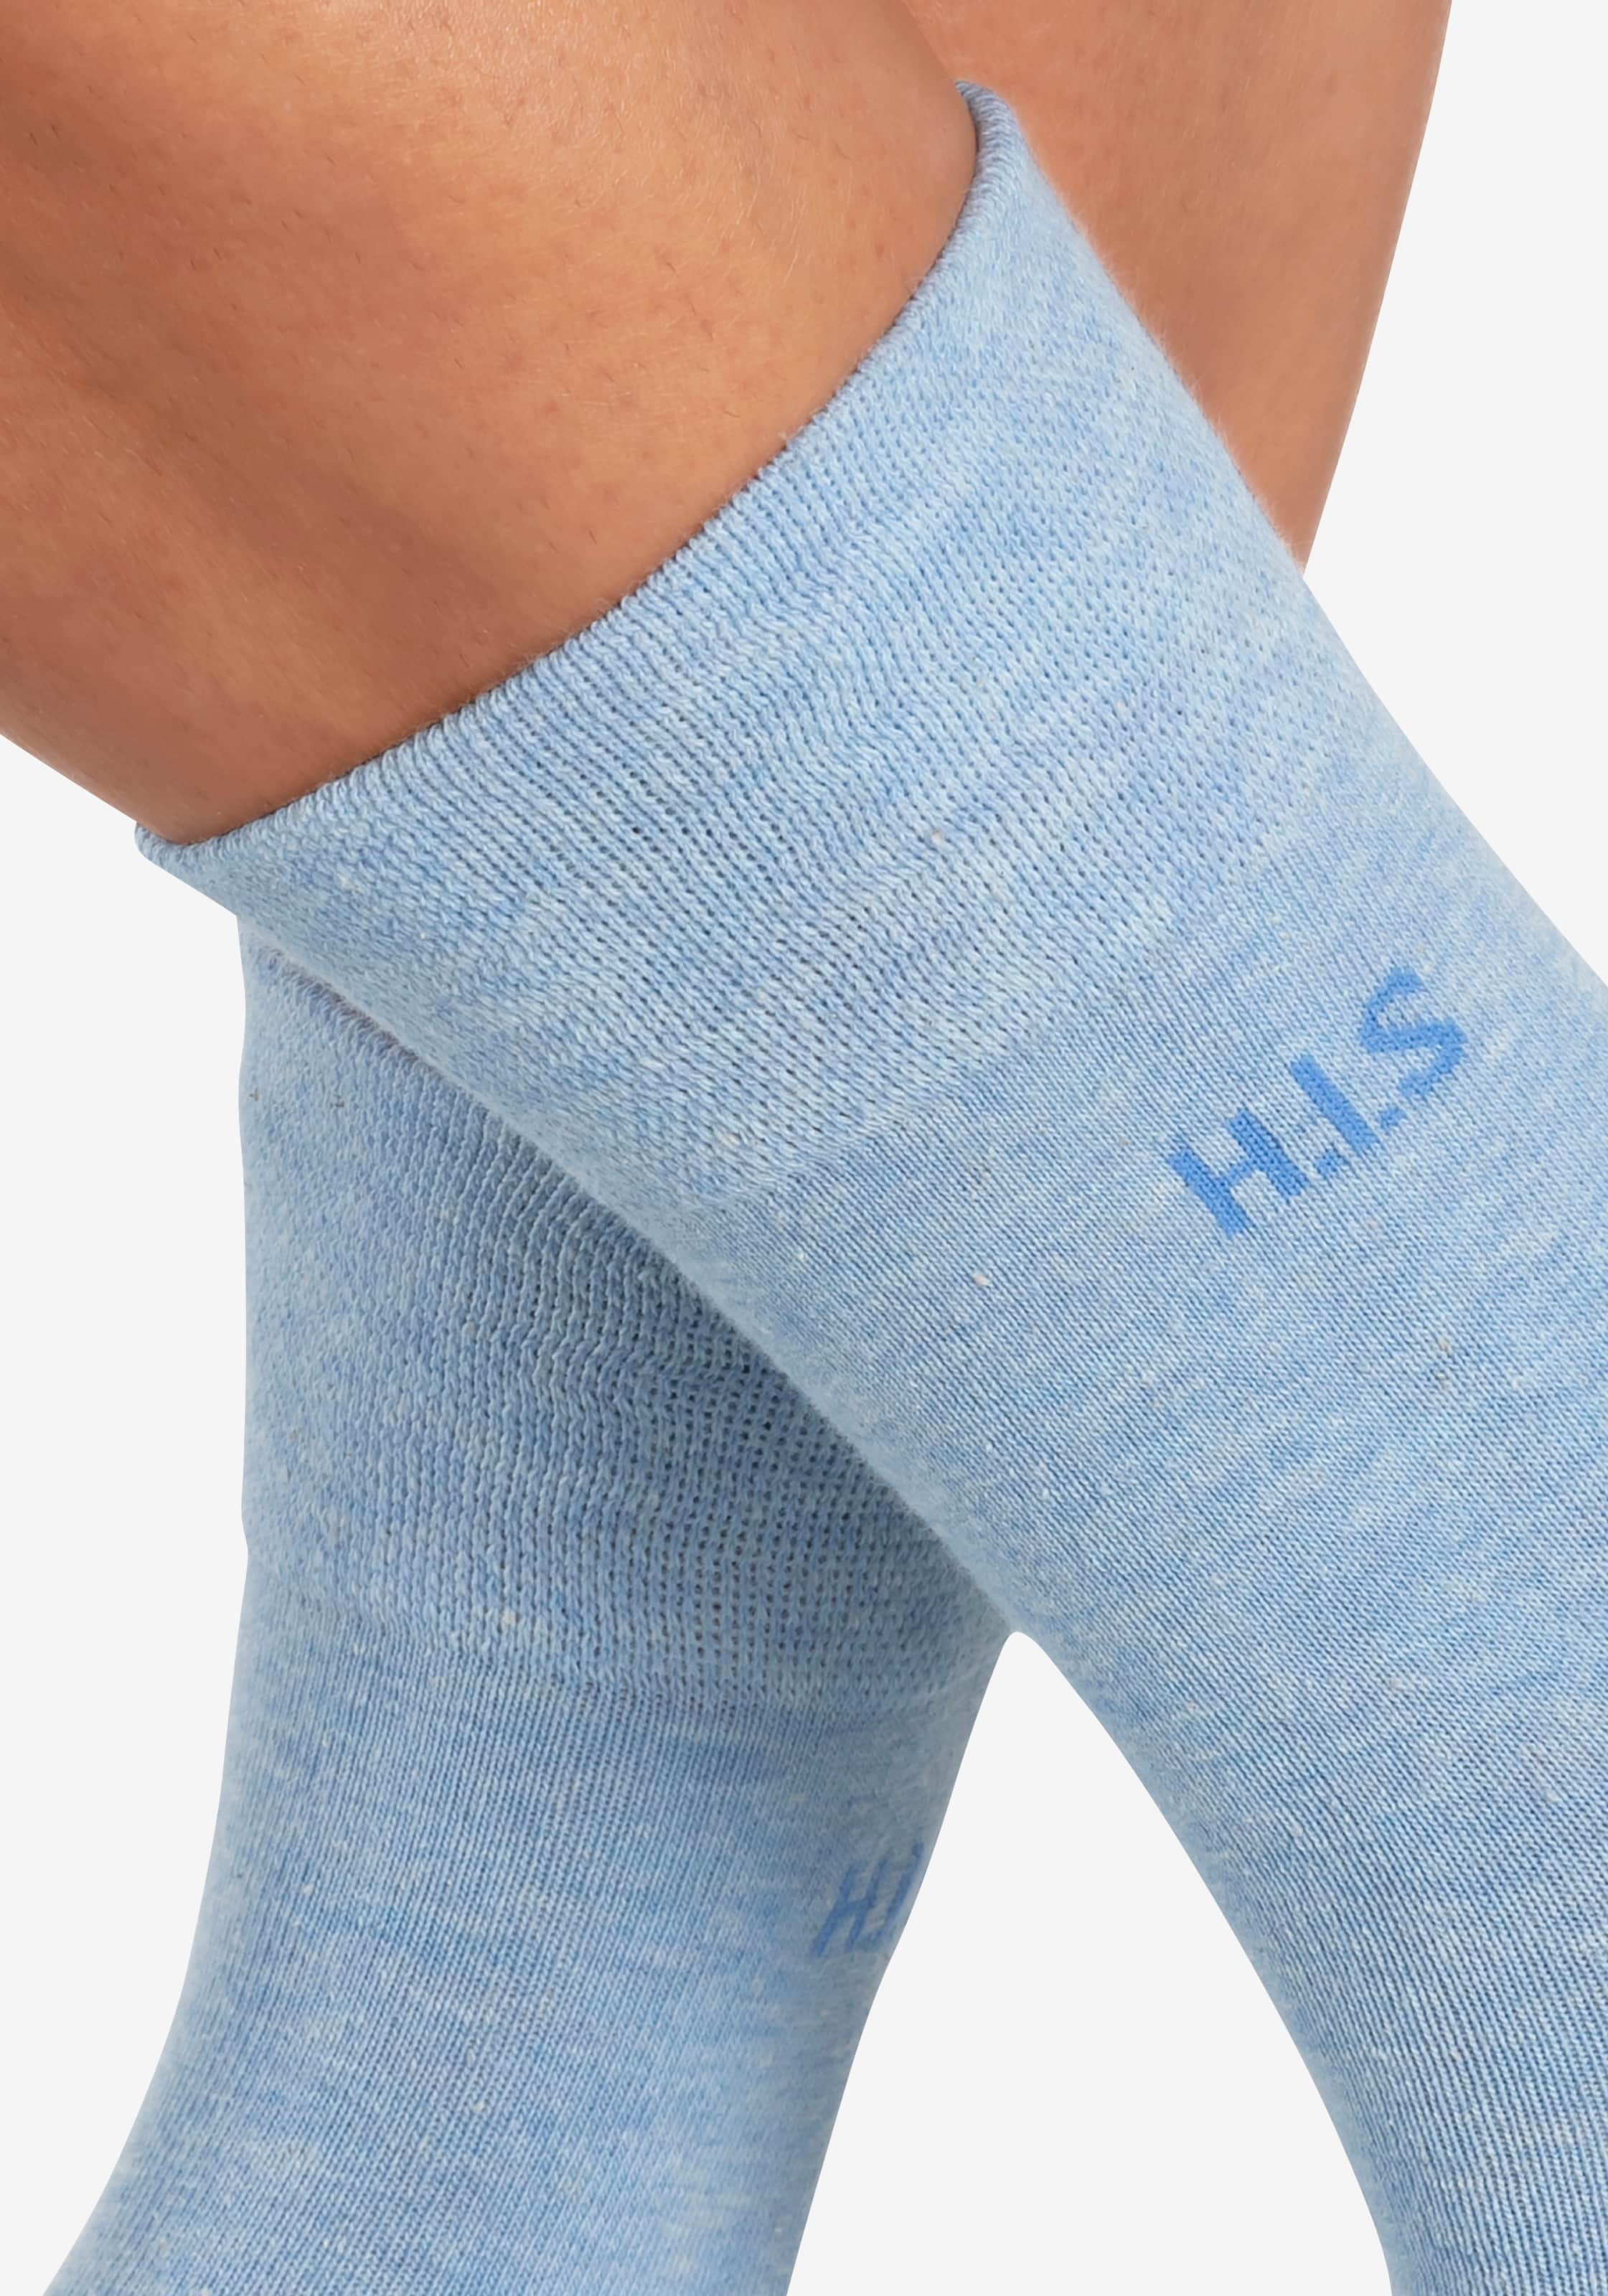 H.I.S Socken in Hellblau, Dunkelblau | ABOUT YOU